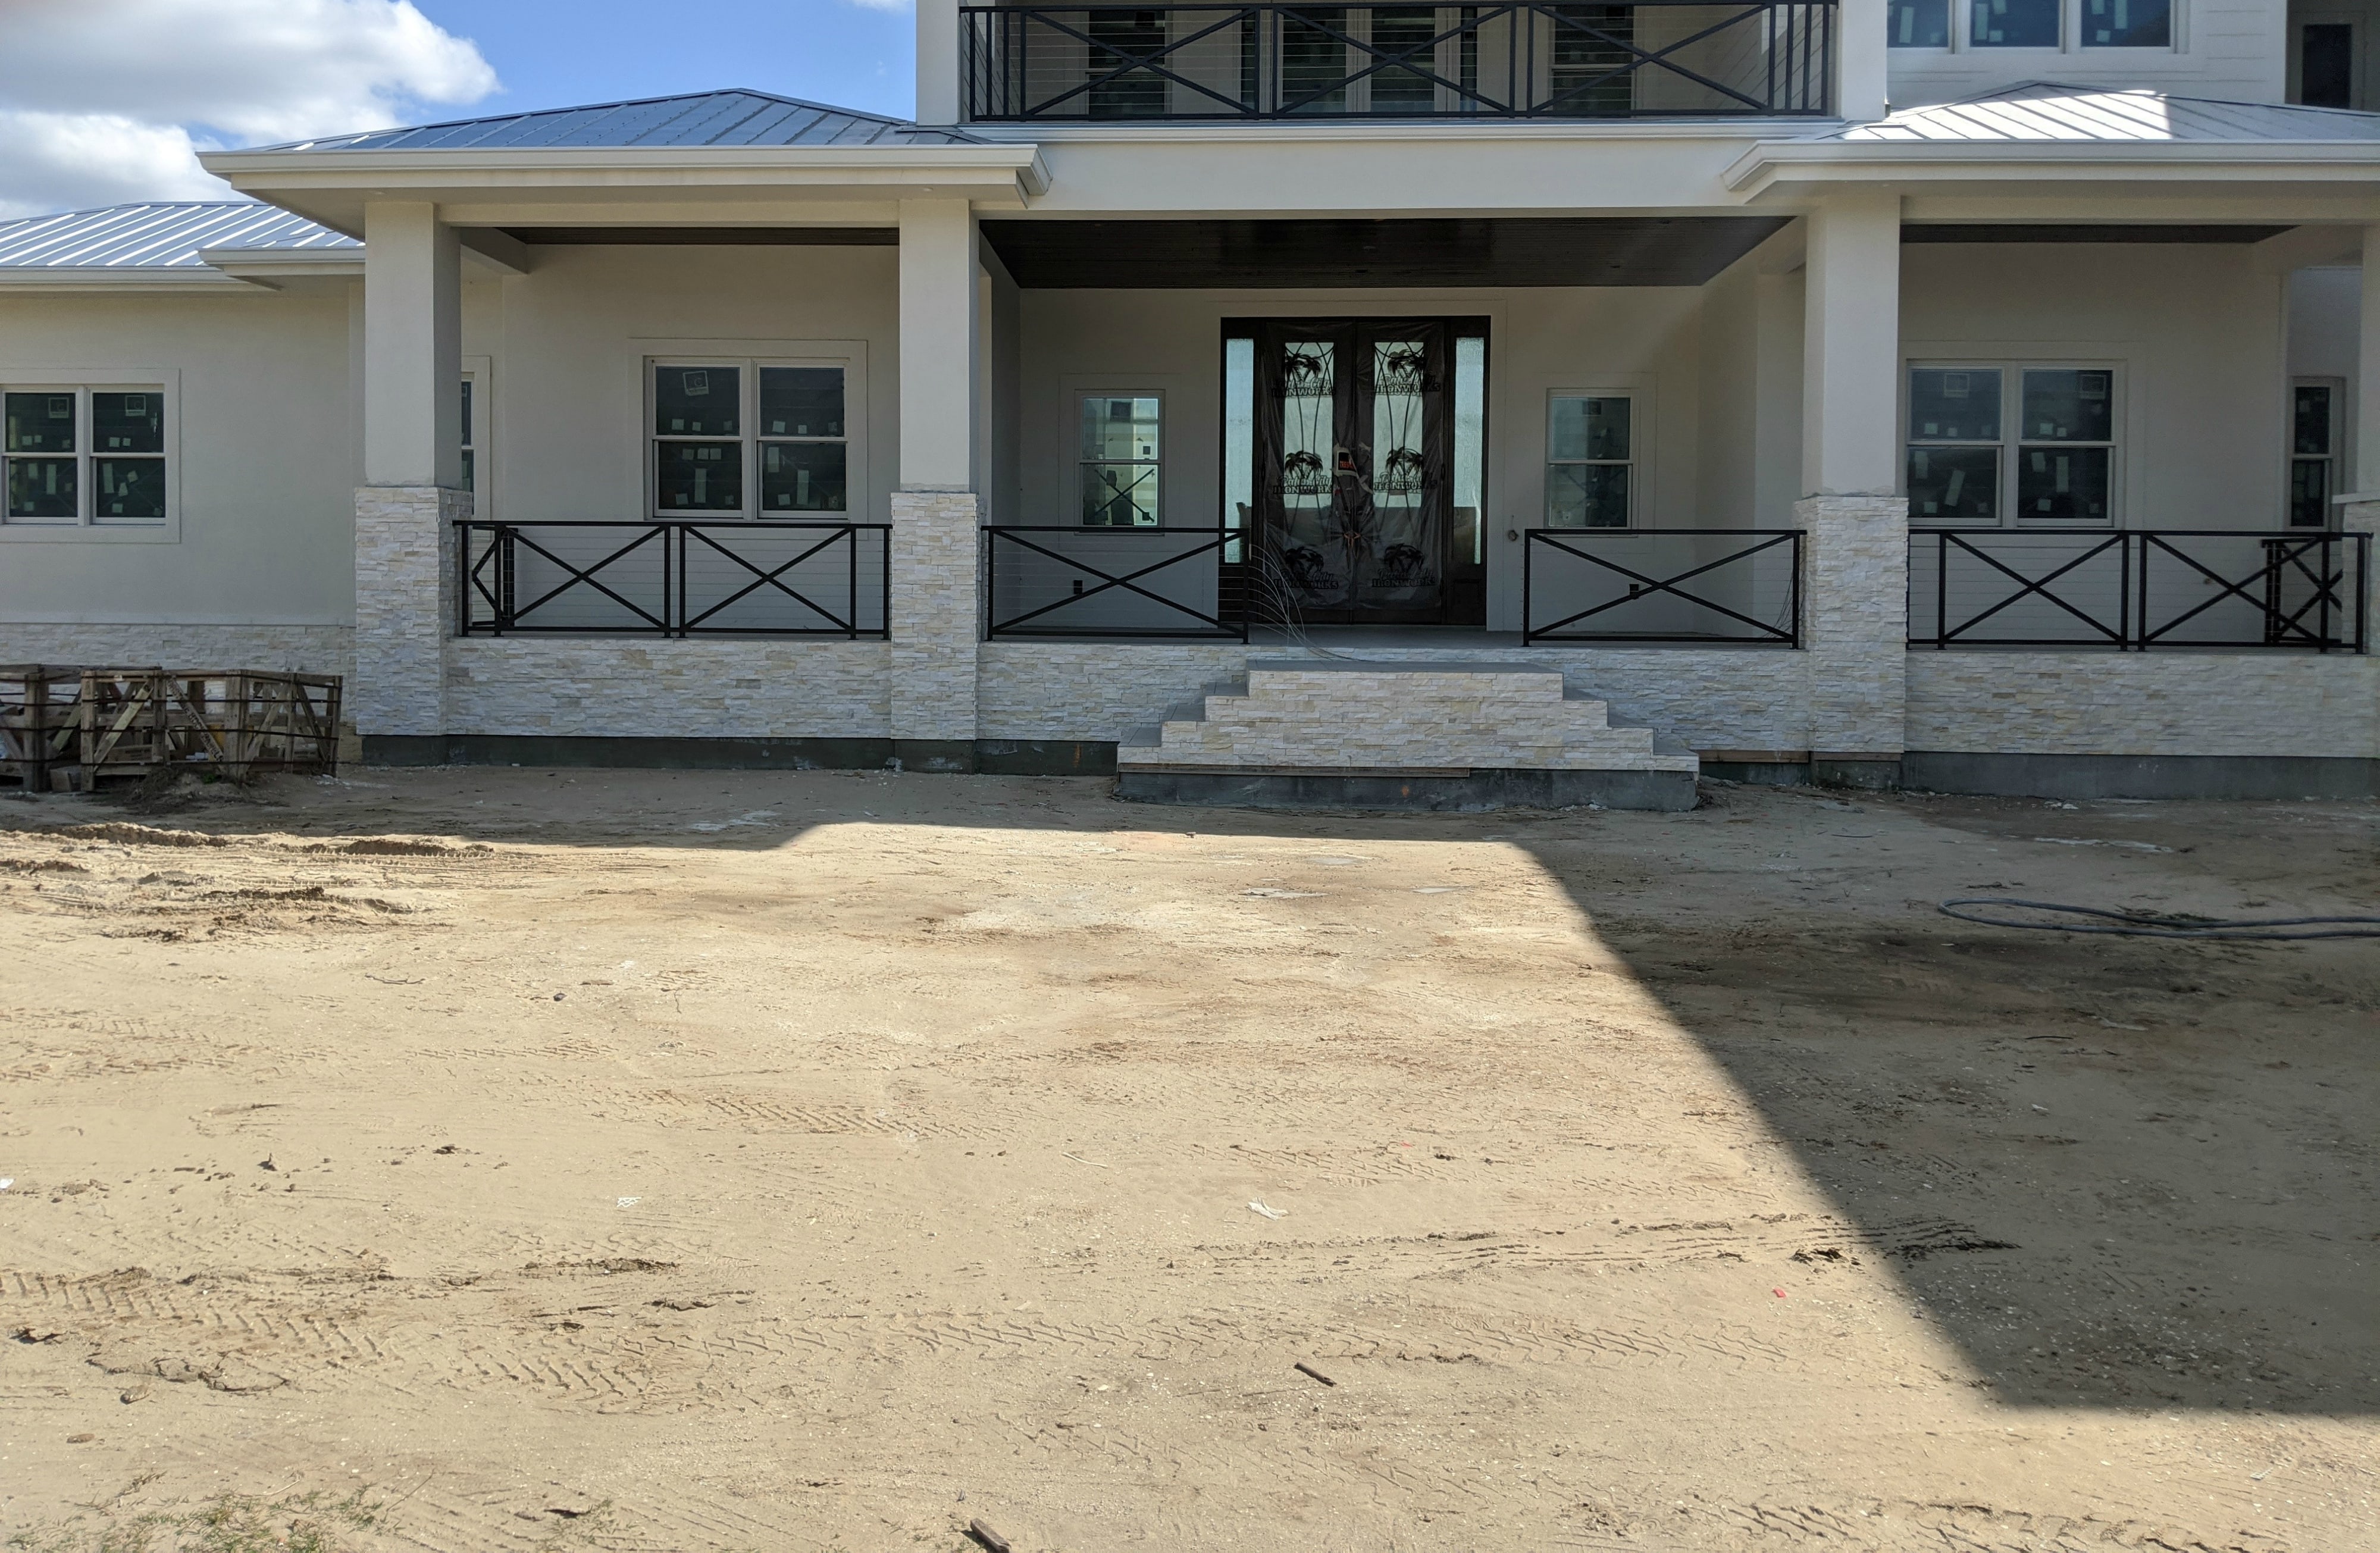 Norstone Ivory XLX Stacked Stone Veneer Panels Wainscoat application on Coastal Modern Styled Florida home